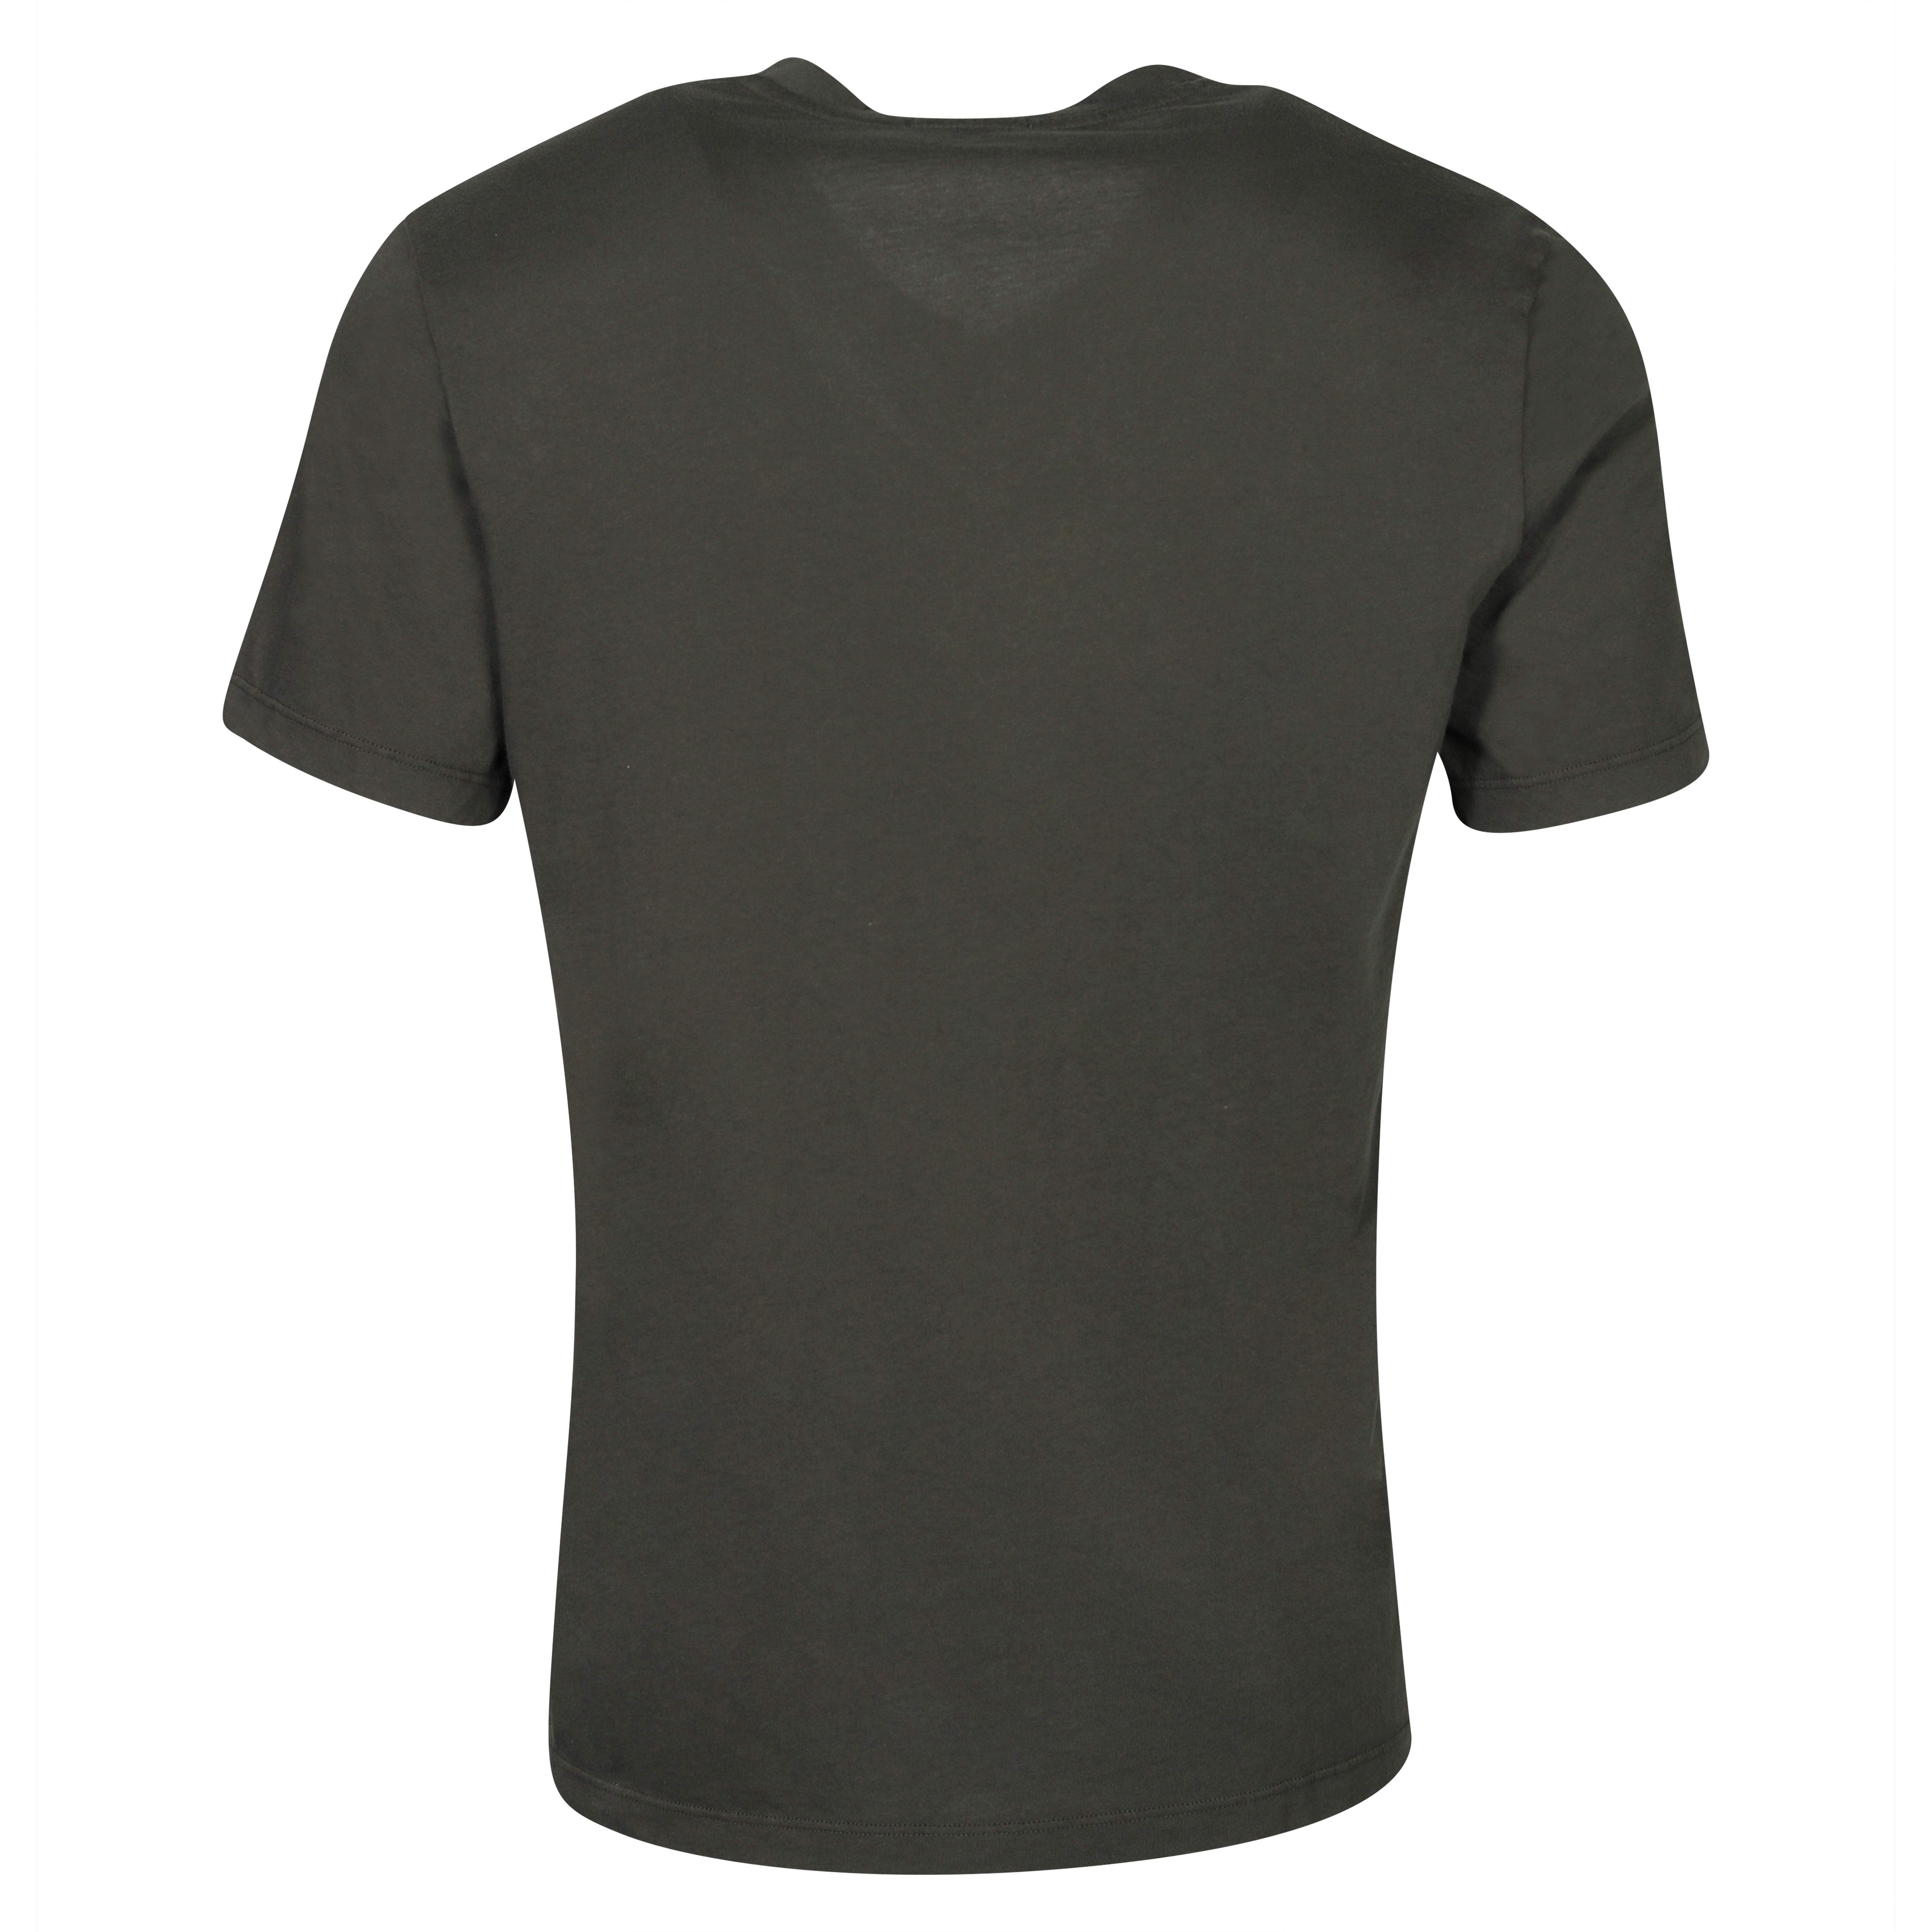 James Perse T-Shirt V-Neck in Olive L/3